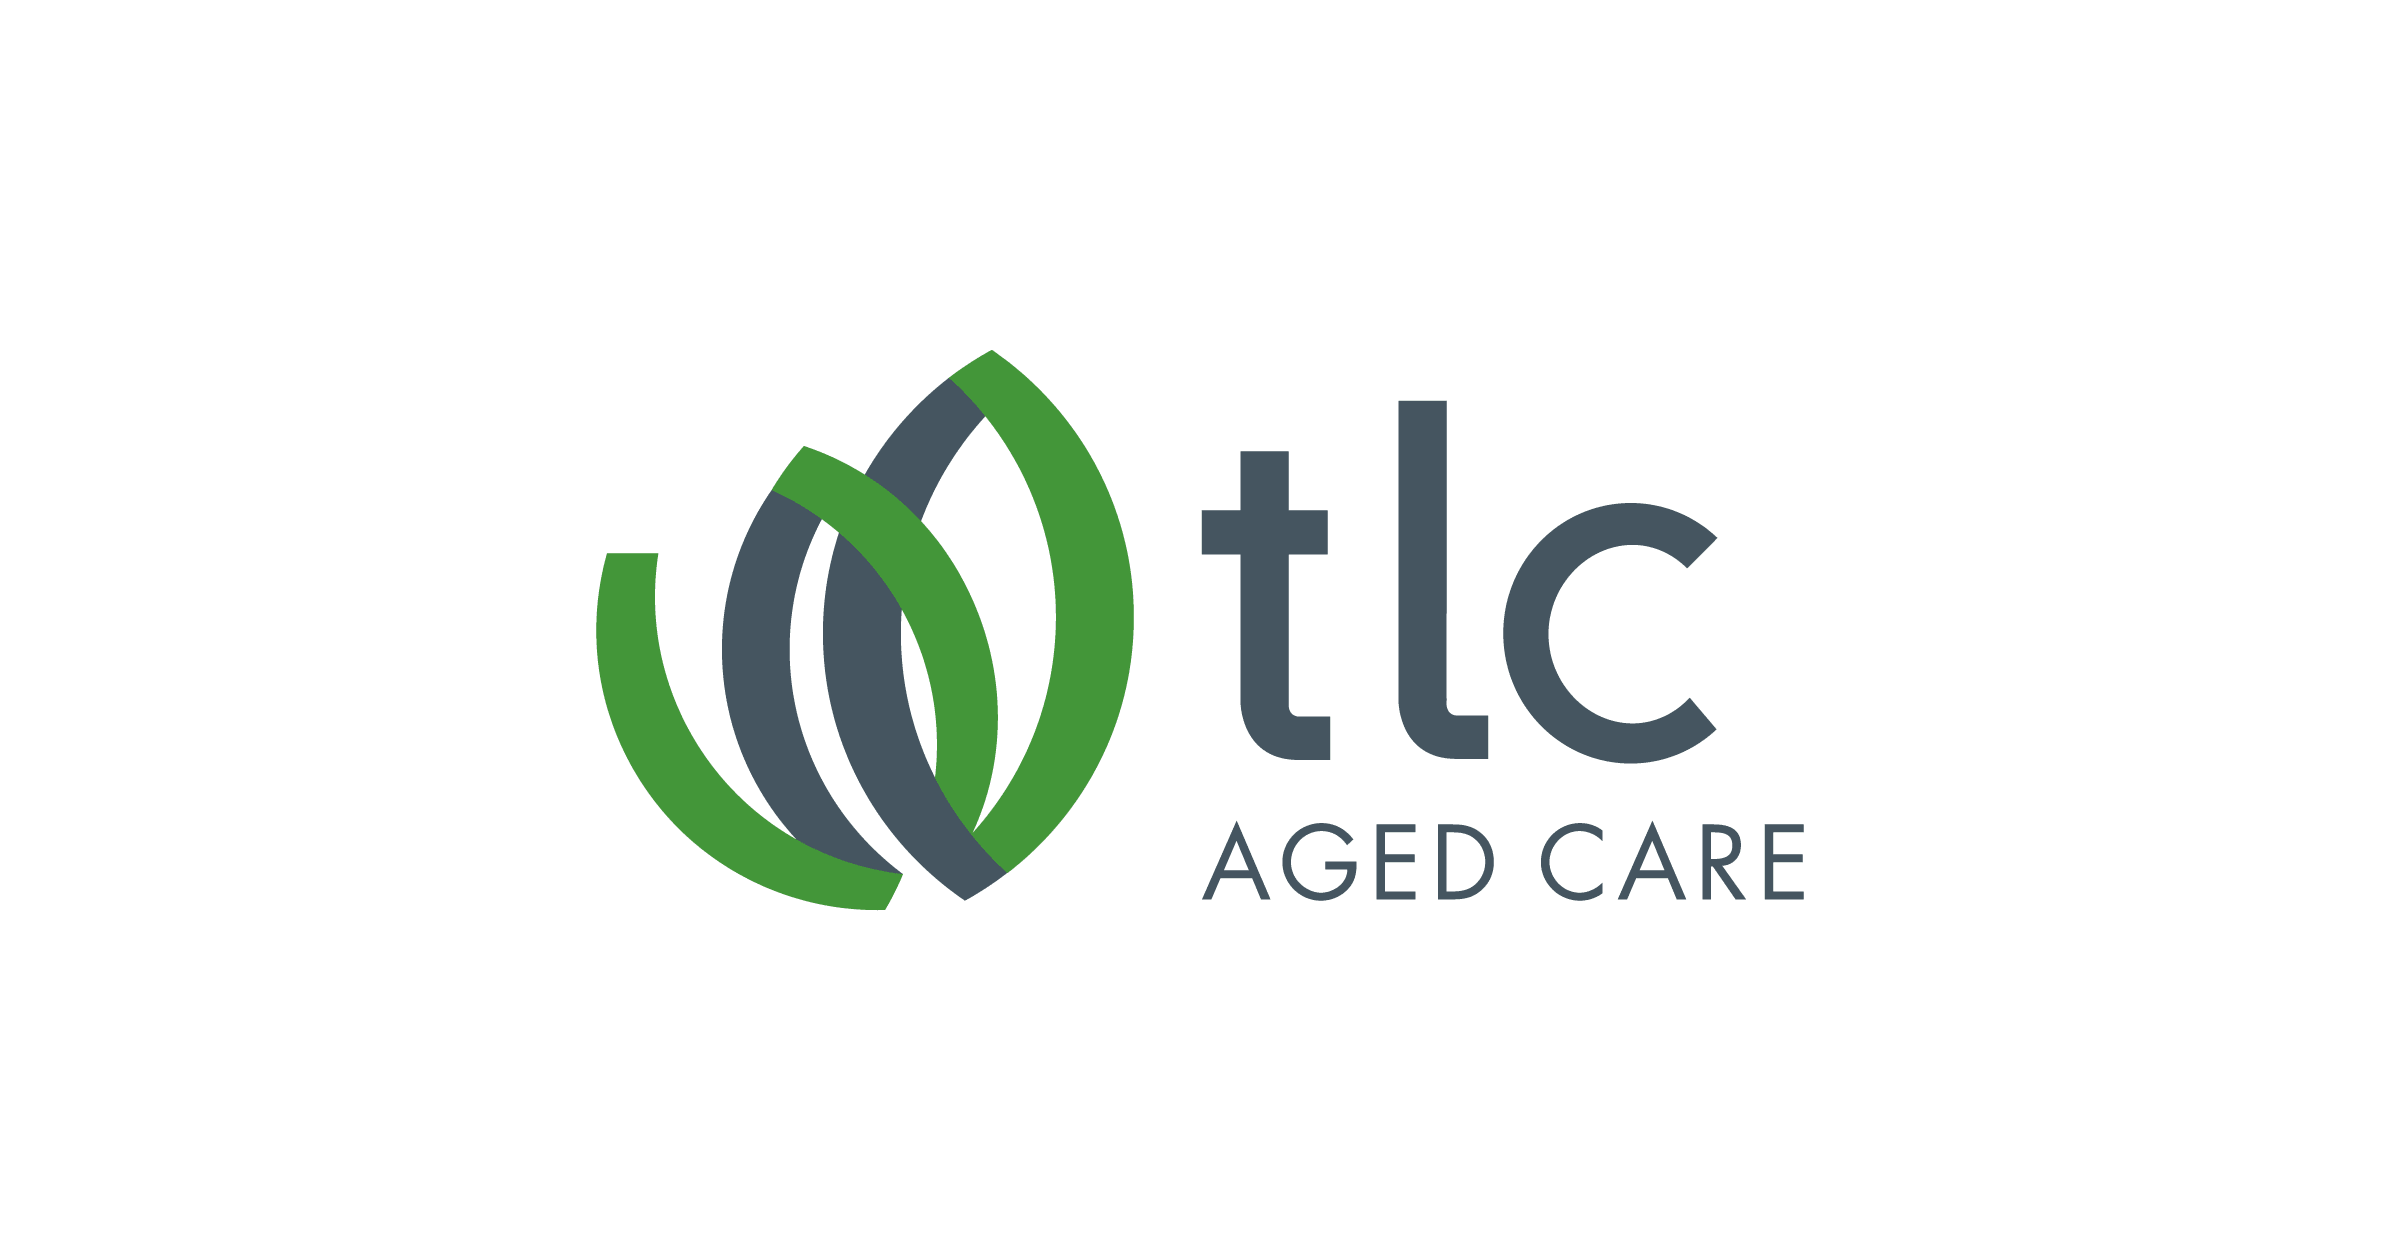 TLC Logo - TLC Aged Care